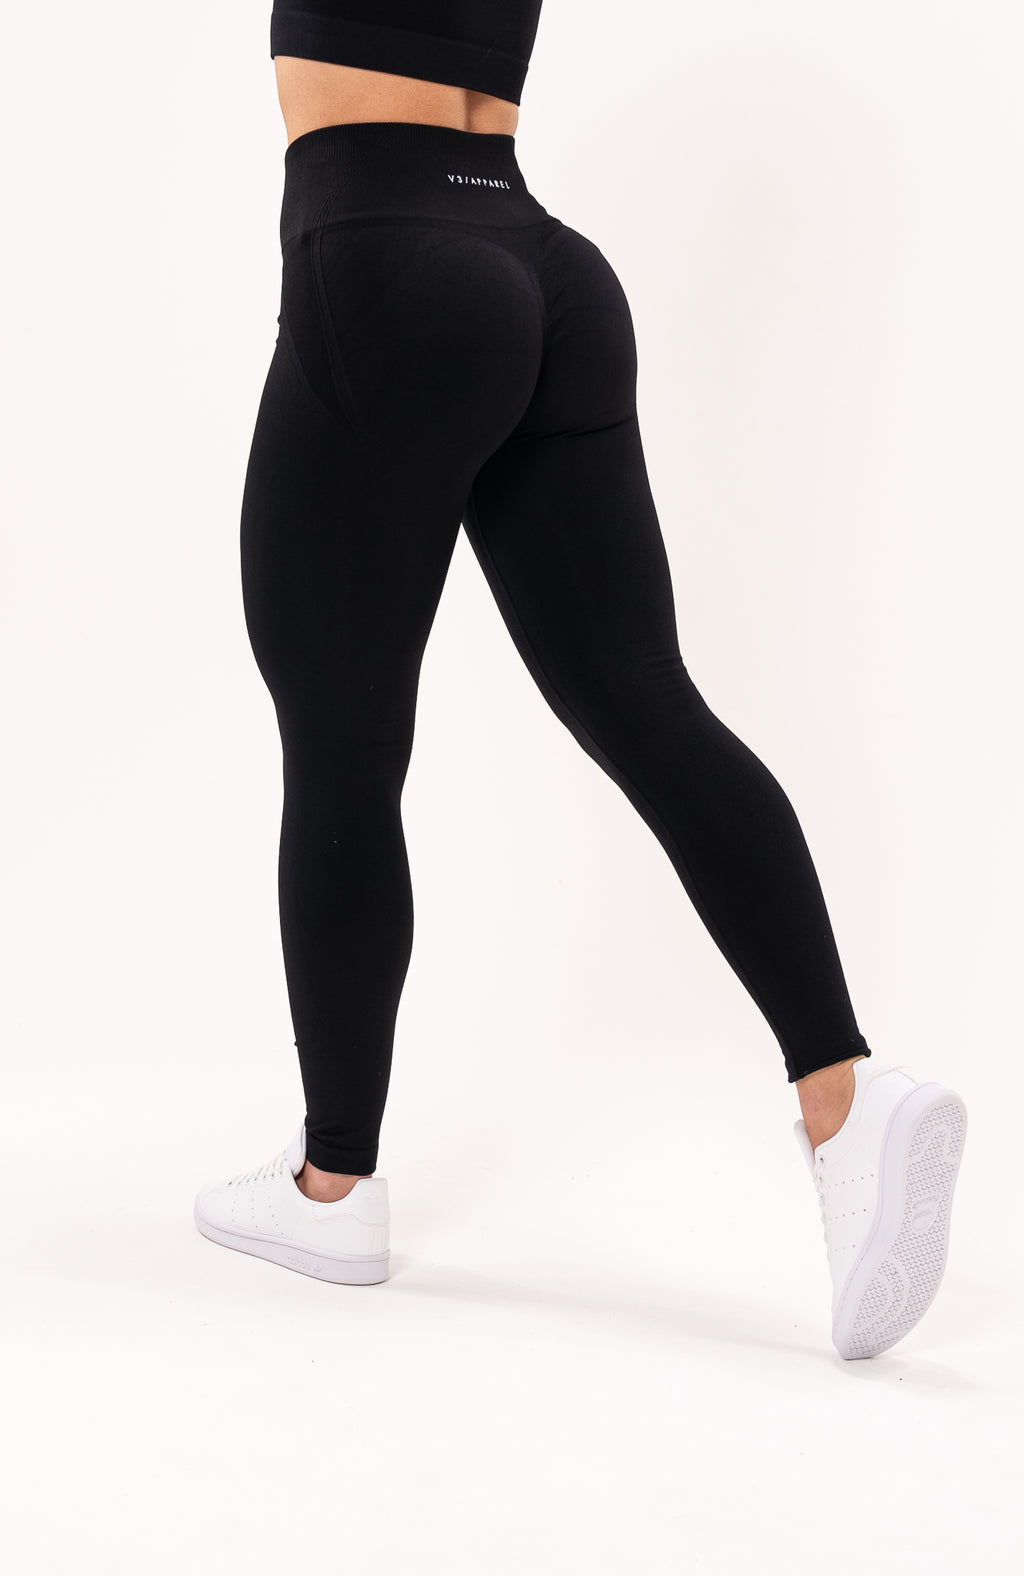 Women's Hip Lift Yoga Pants, Squat Proof Hip Butt Workout High Waist  Leggings,B,M price in UAE,  UAE